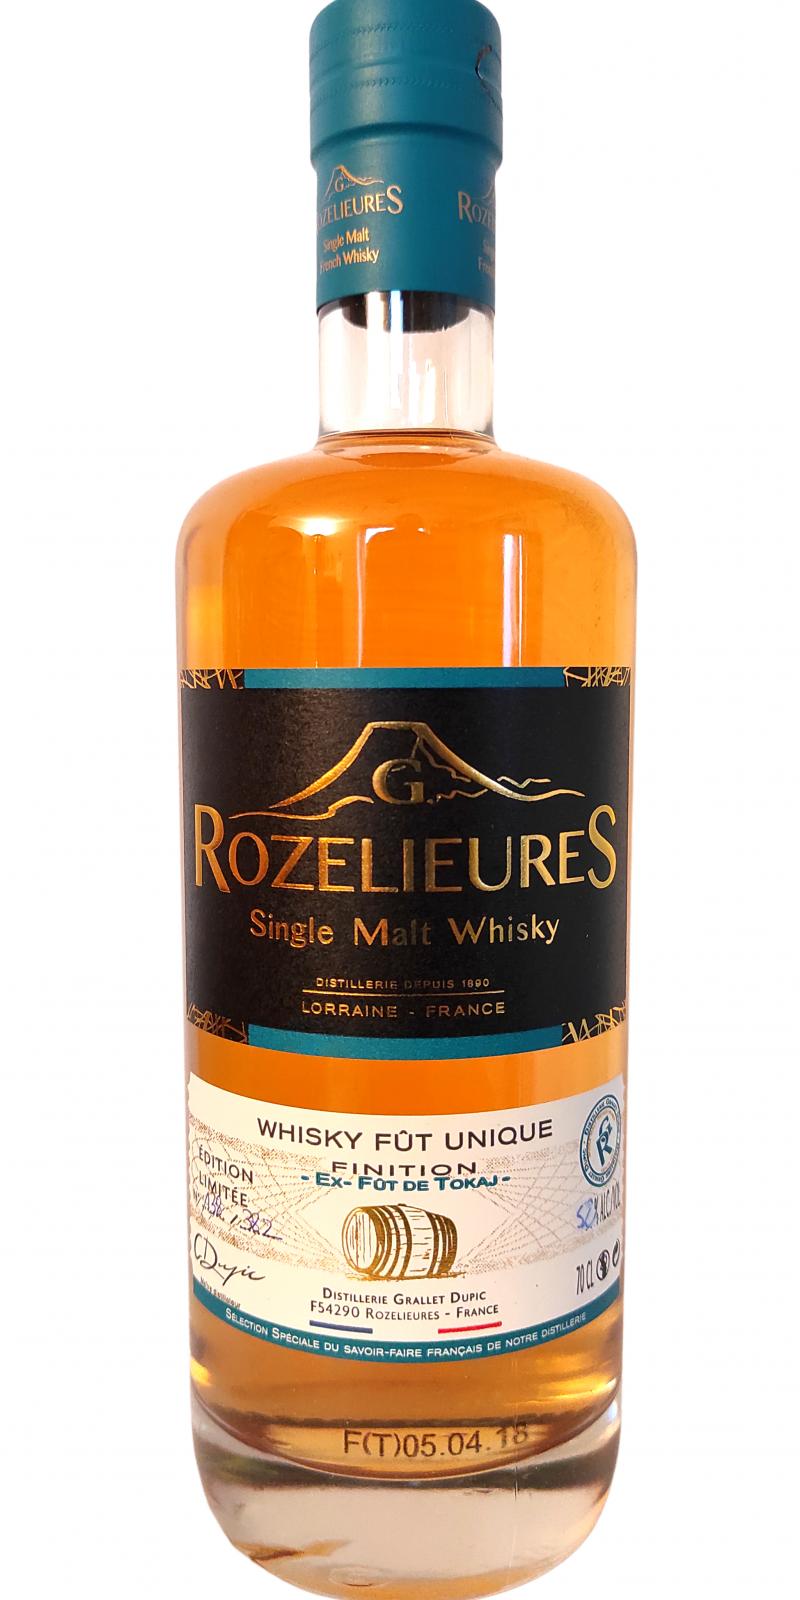 G. Rozelieures Whisky fut unique 52% 700ml - Spirit Radar